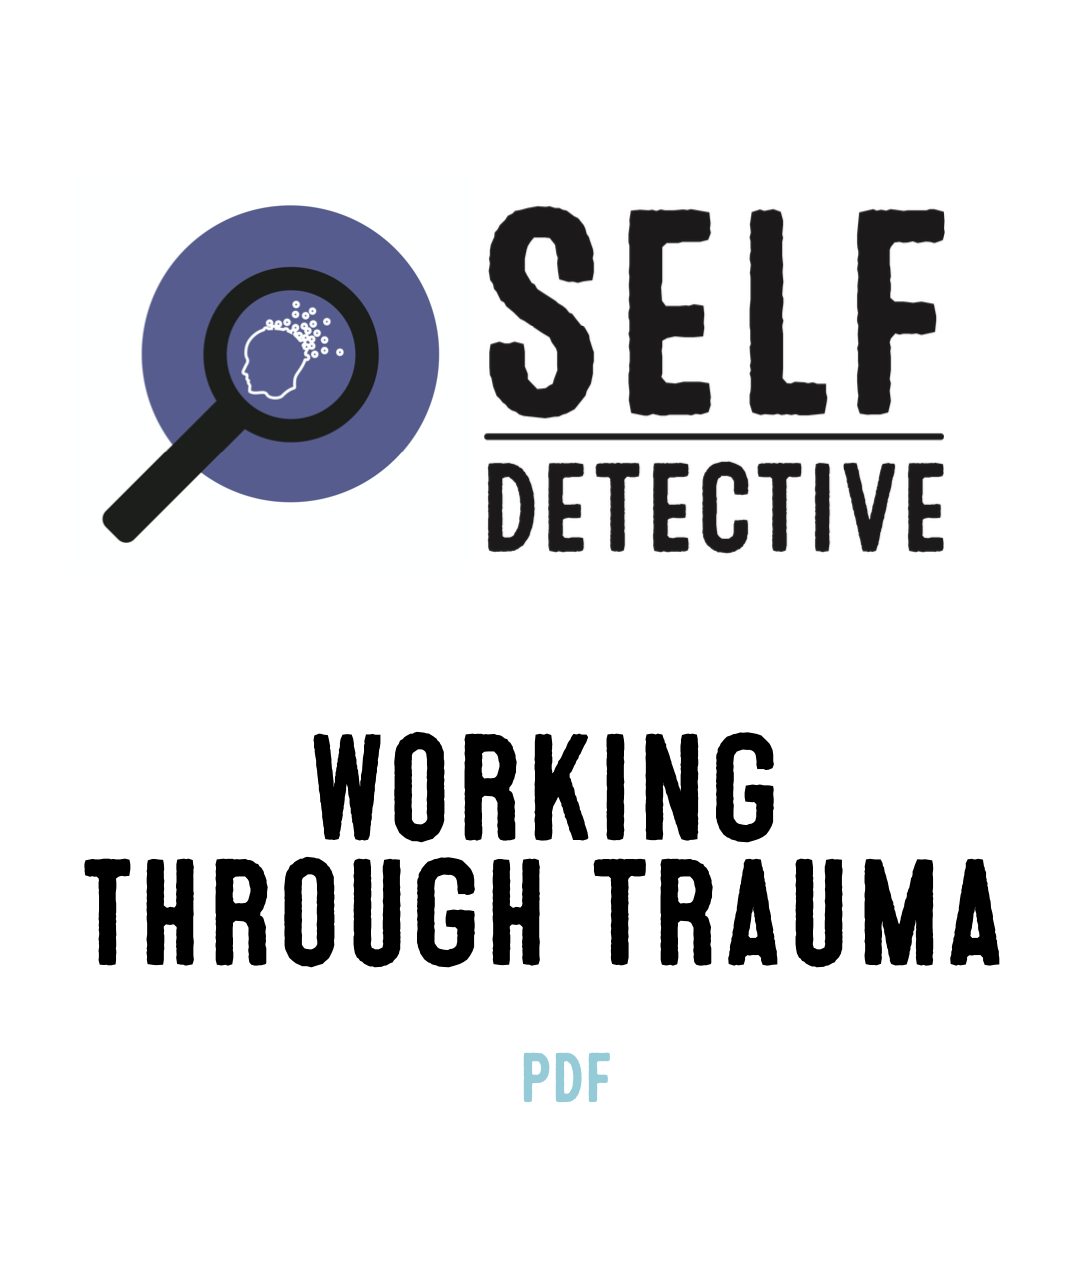 Working Through Trauma (PDF version)